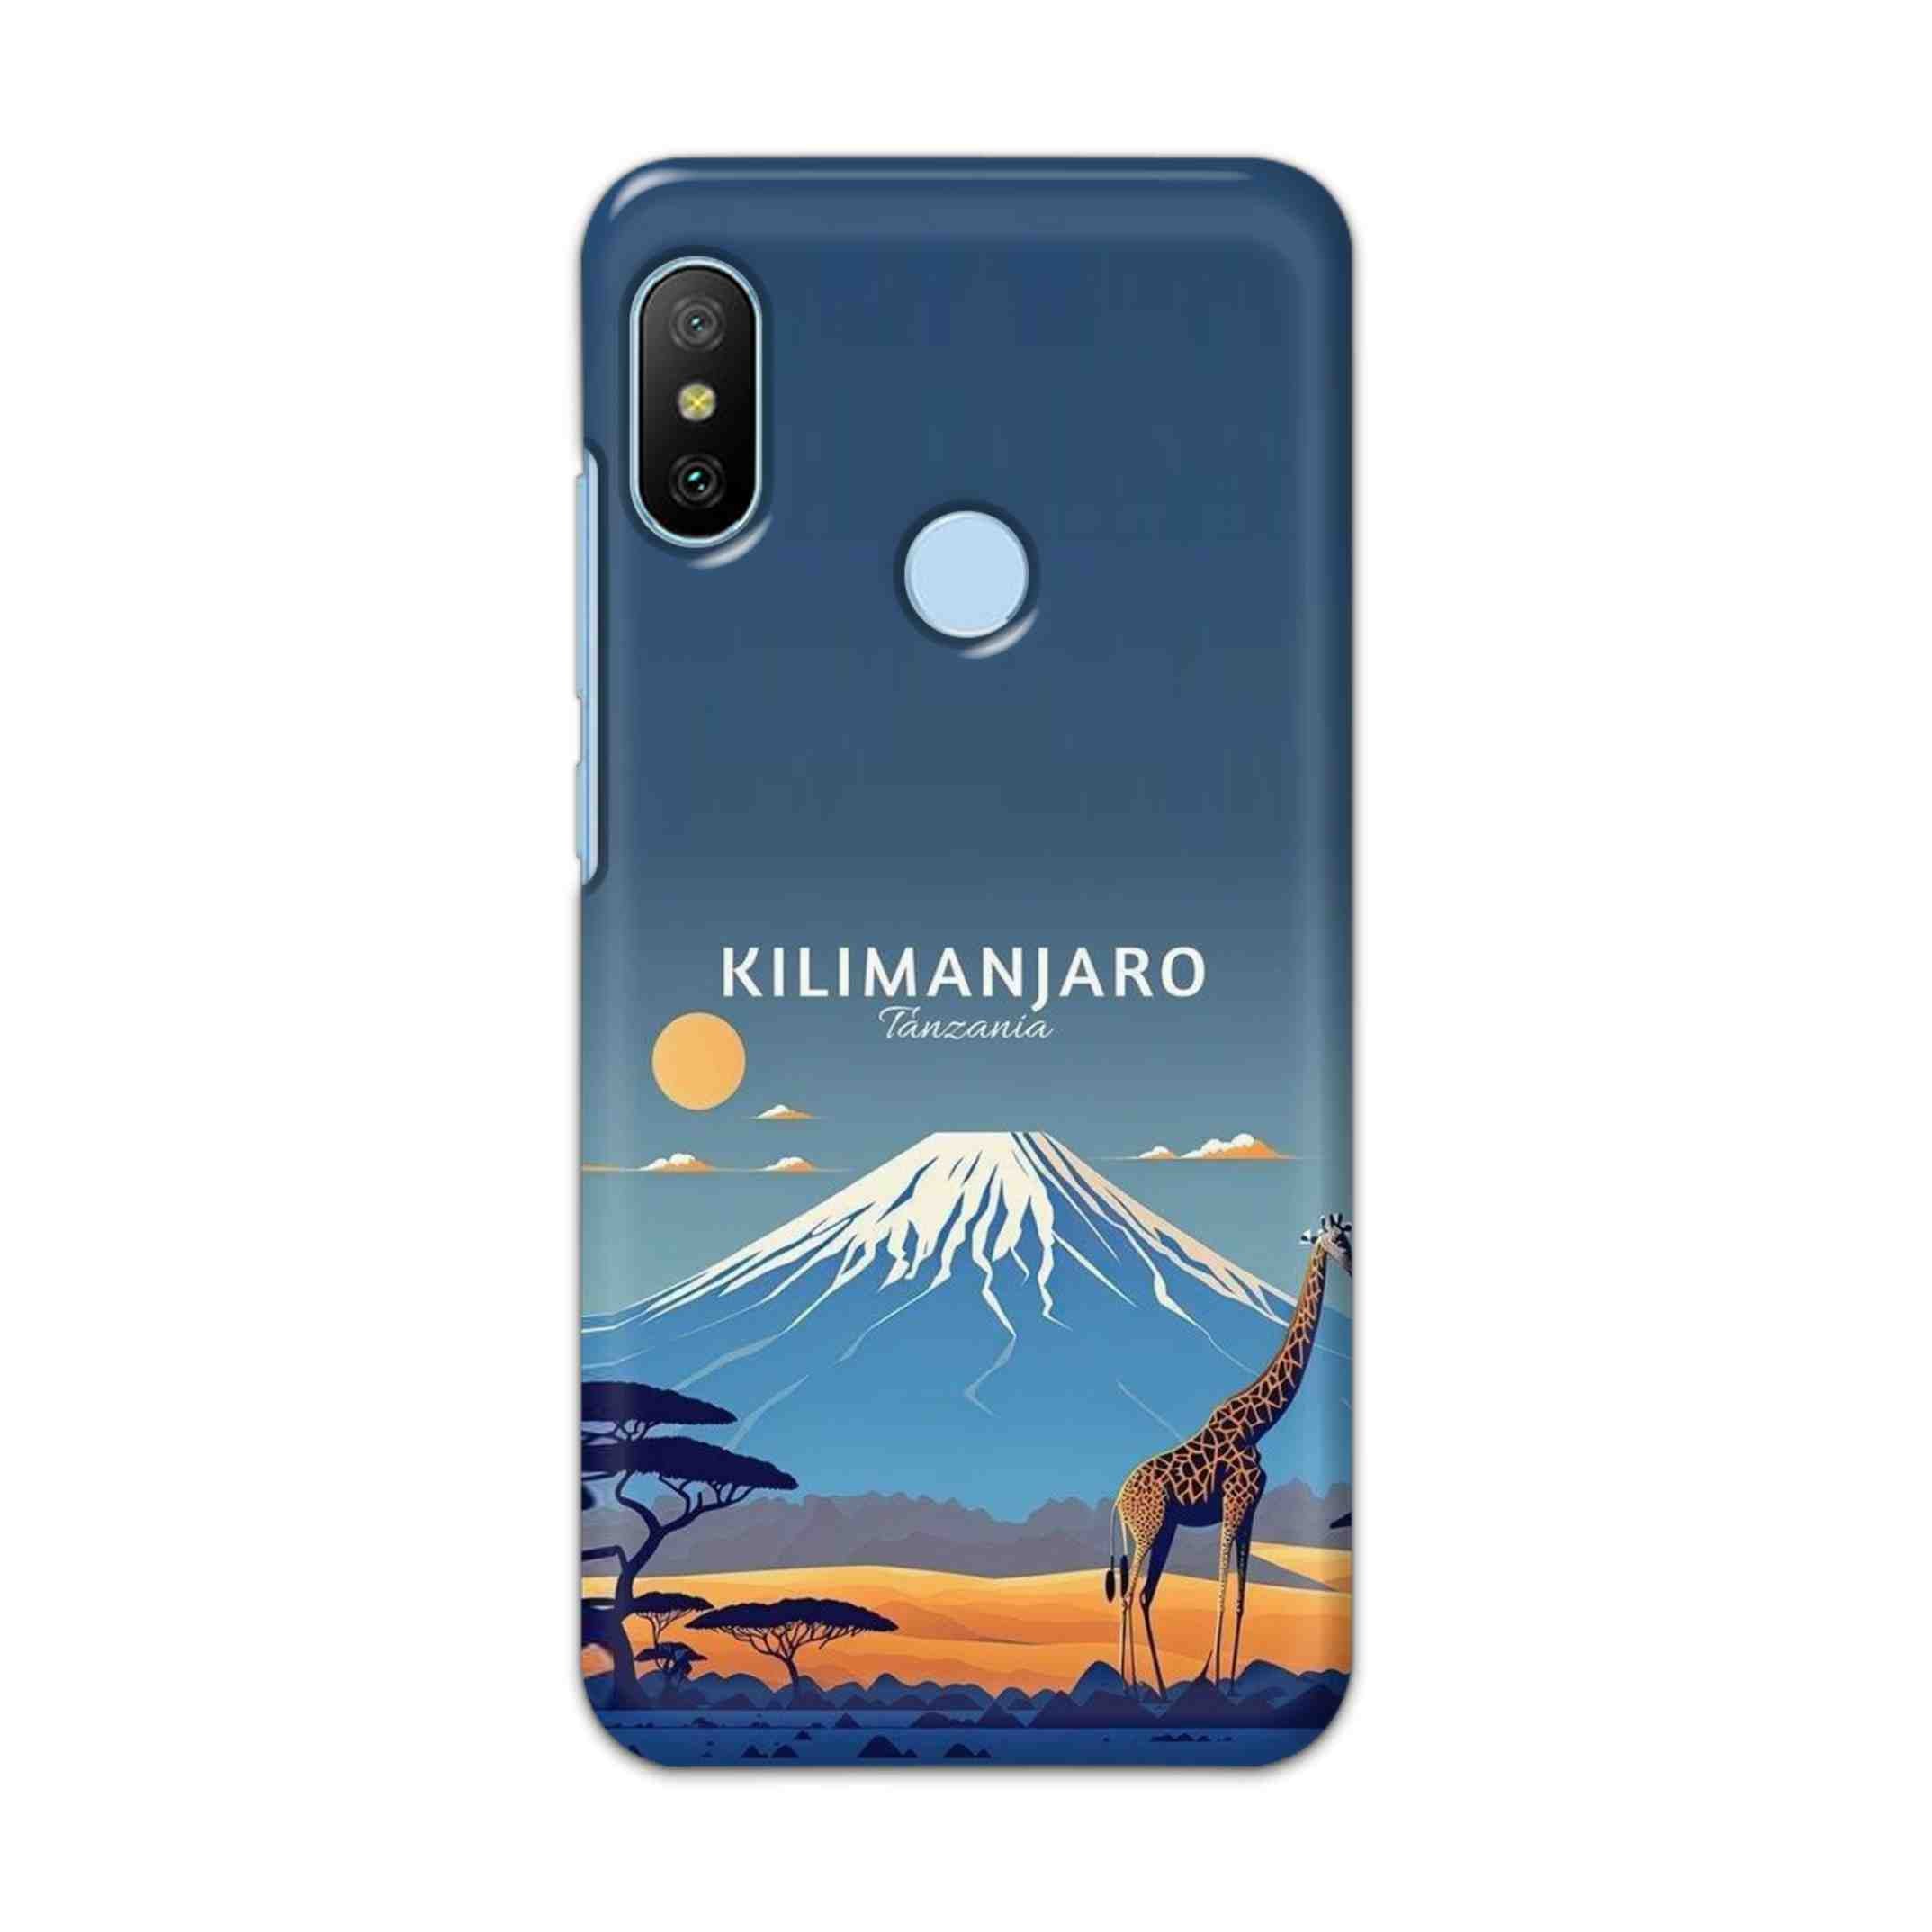 Buy Kilimanjaro Hard Back Mobile Phone Case/Cover For Xiaomi Redmi 6 Pro Online